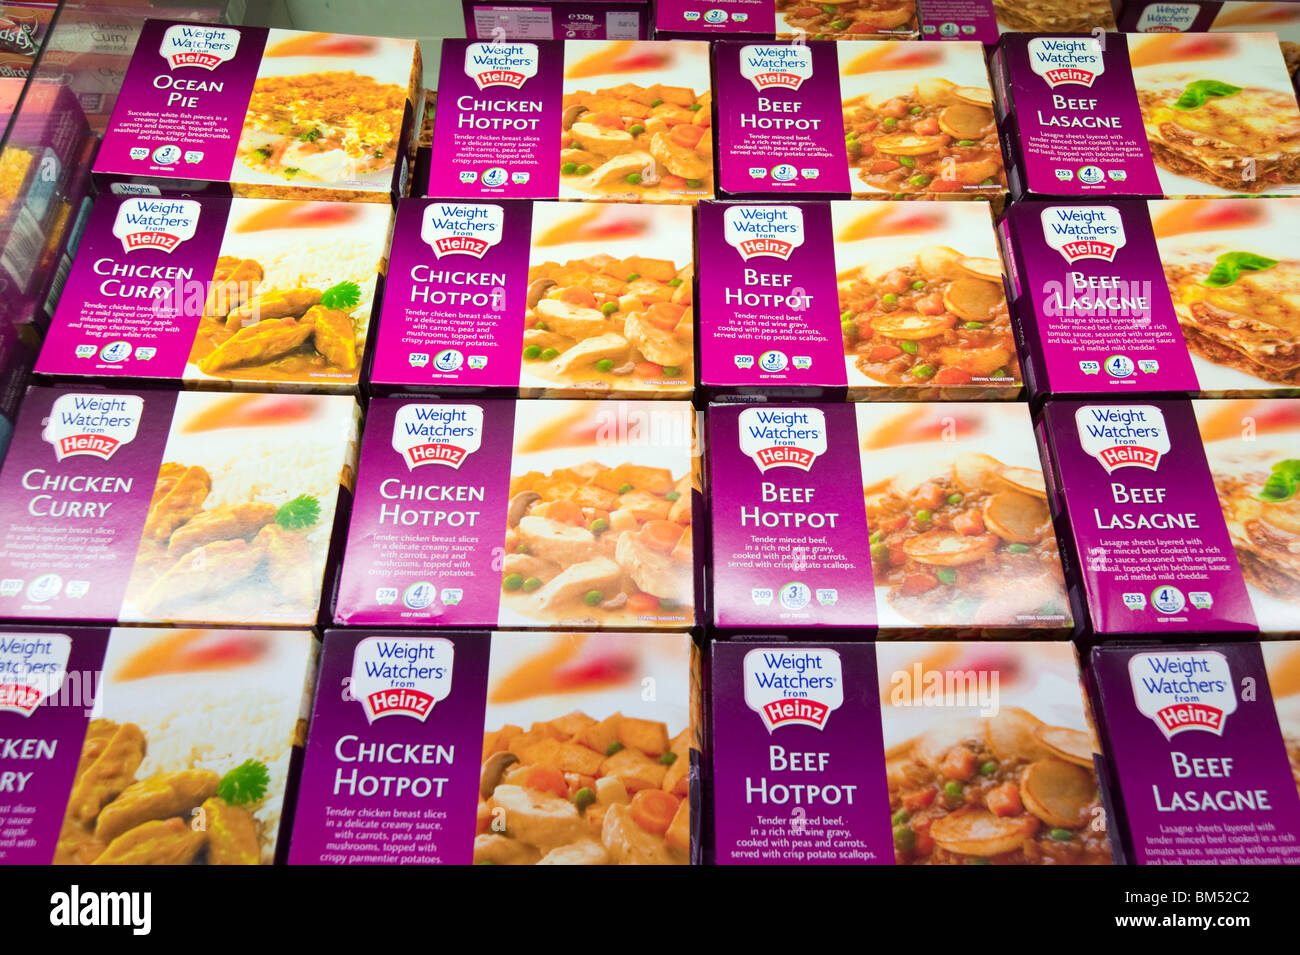 Heinz Weight Watchers ready meals in supermarket, England, UK Stock Photo